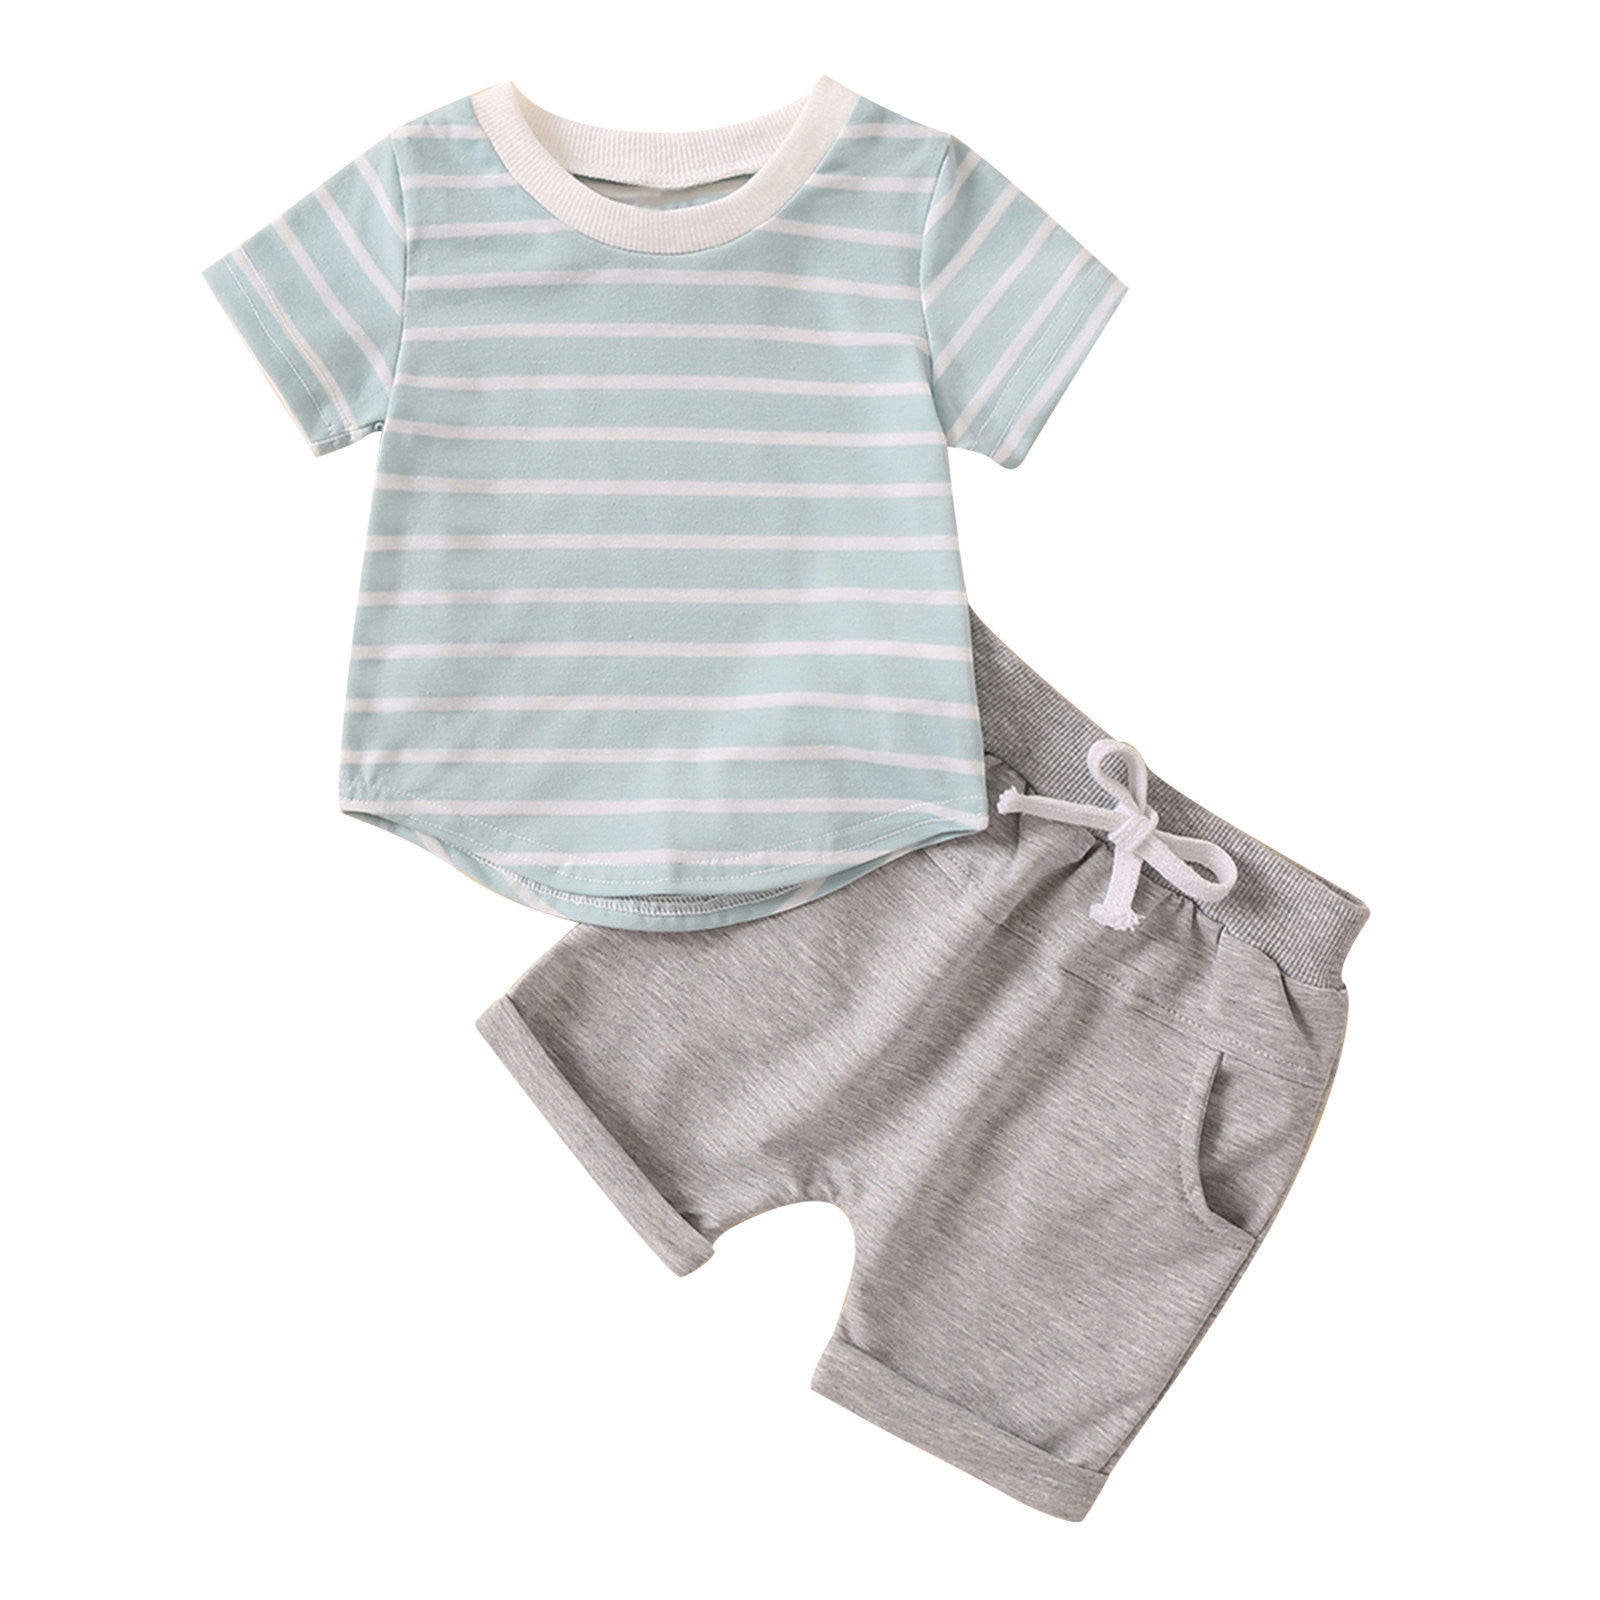 Pejock Infant Toddler Baby Boys Clothes Outfits Shirt Short Sets ...